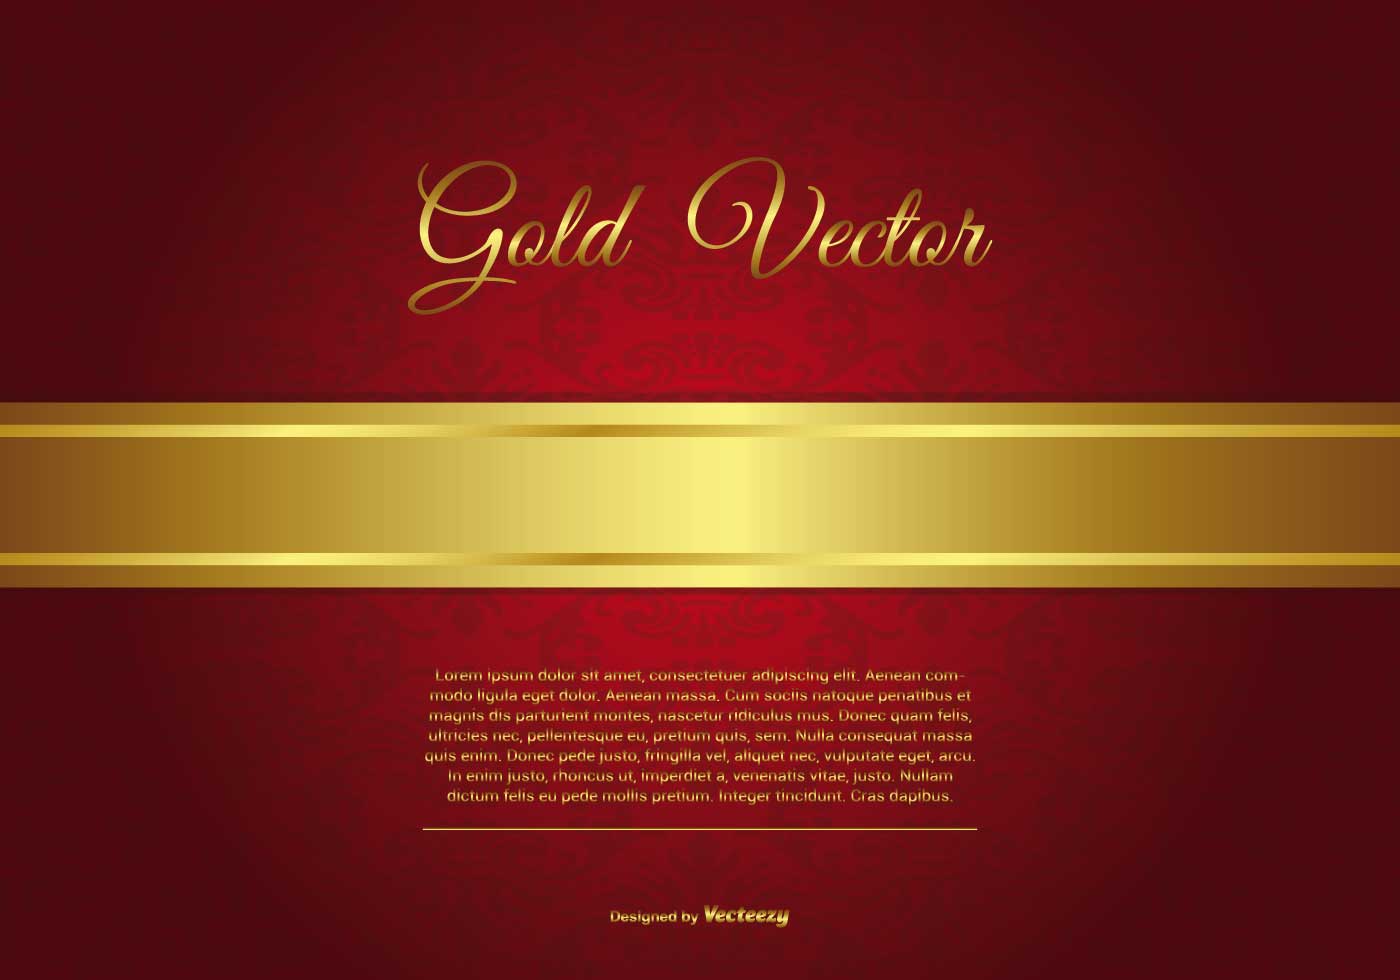 Elegant Gold and Red Background Illustration Download Free Vector Art